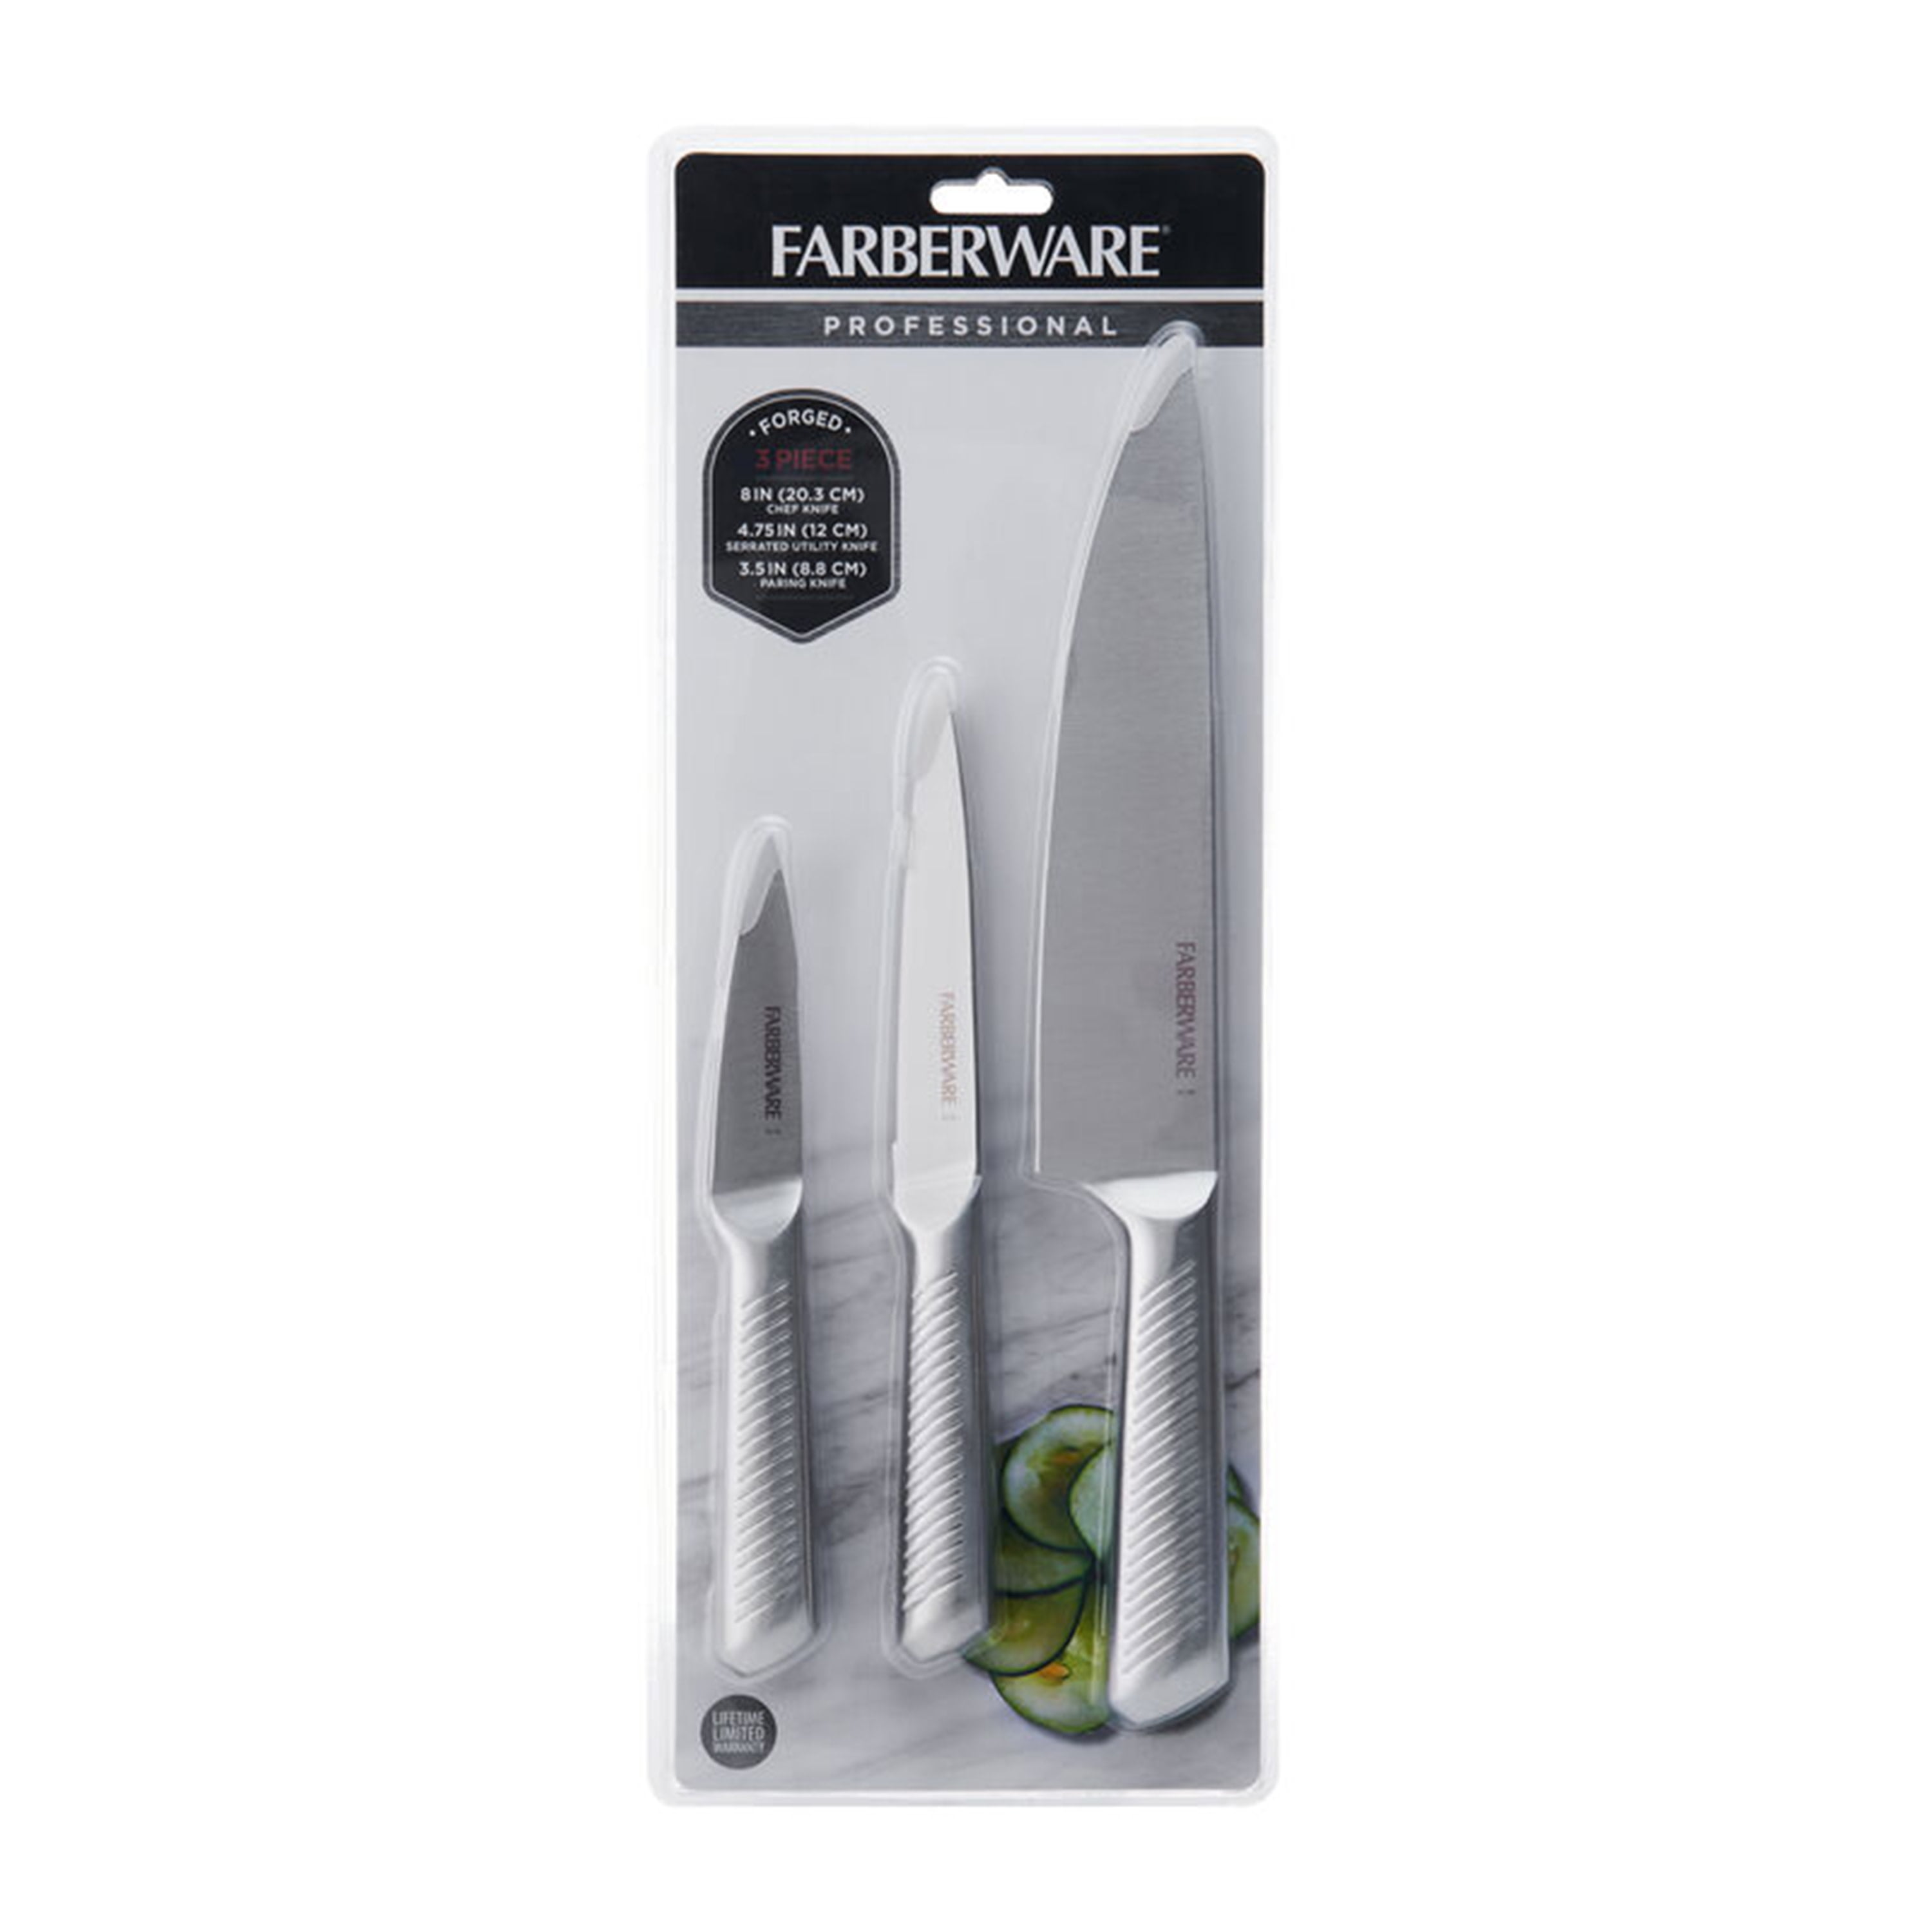  Farberware Stainless Steel Chef Knife Set, 3 Piece, Black: Home  & Kitchen